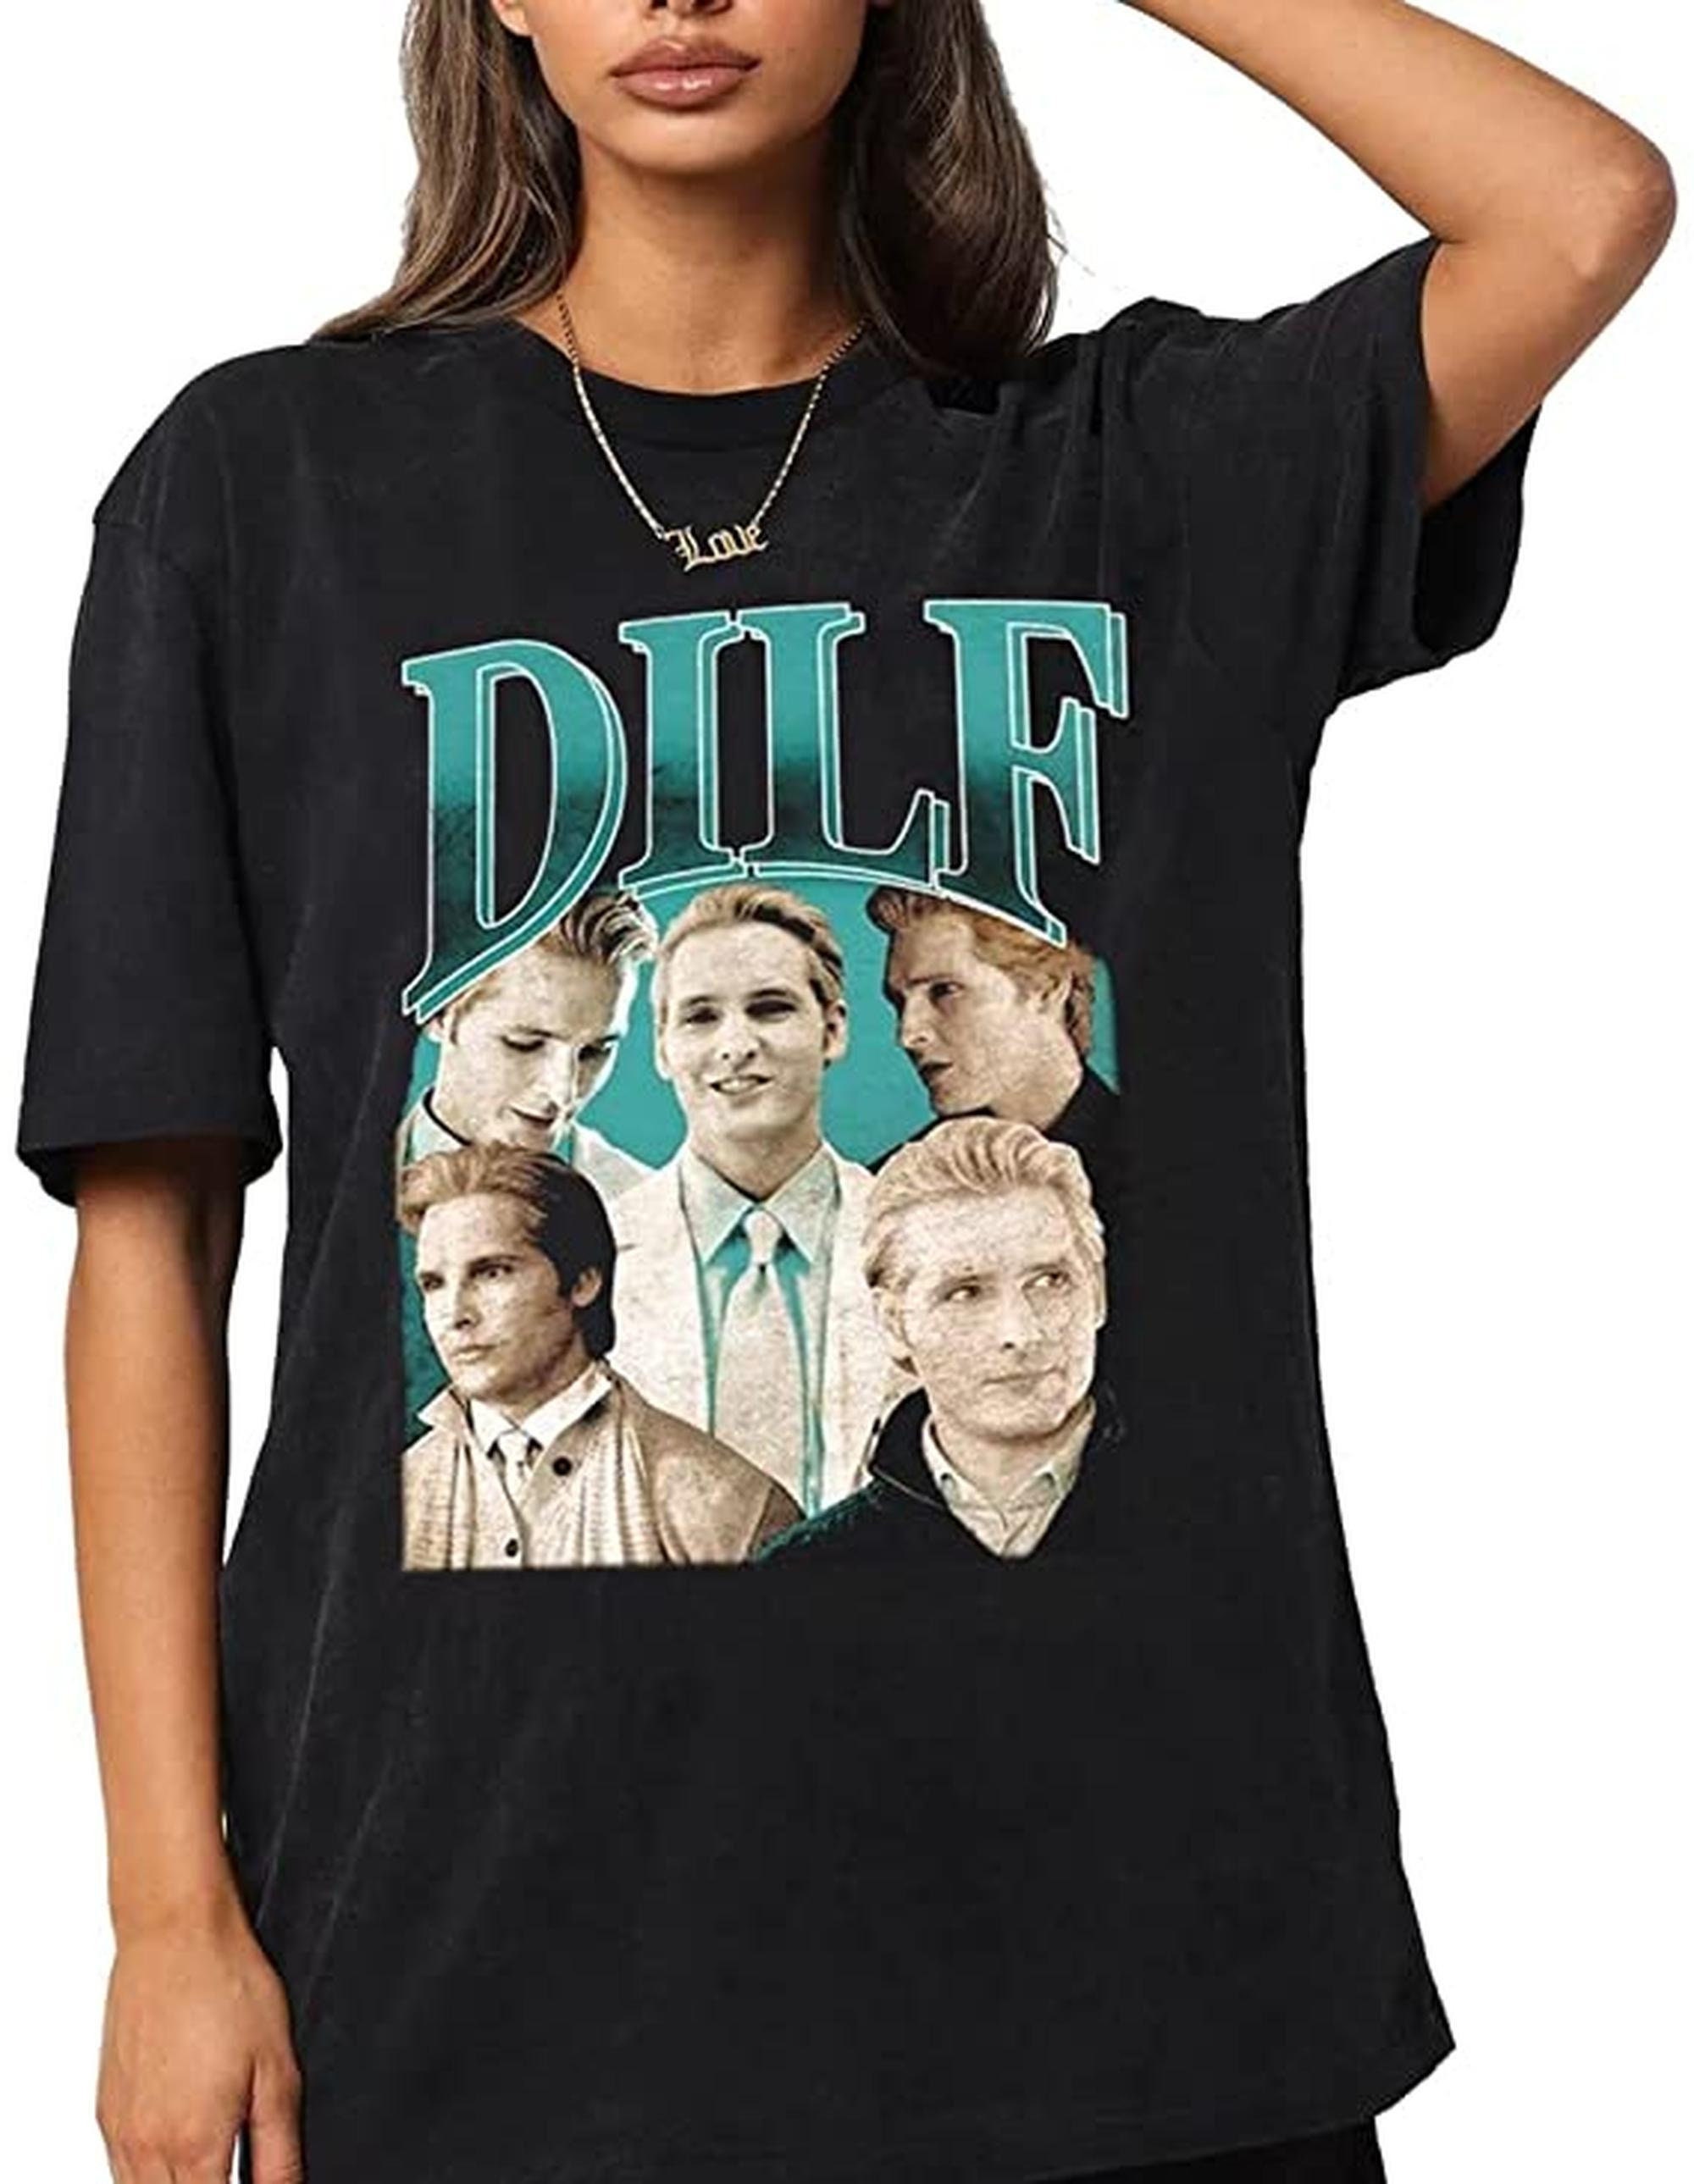 Discover Carlisle CuLlen Vintage Retro 90's Tee - The Original DILF, T-shirts